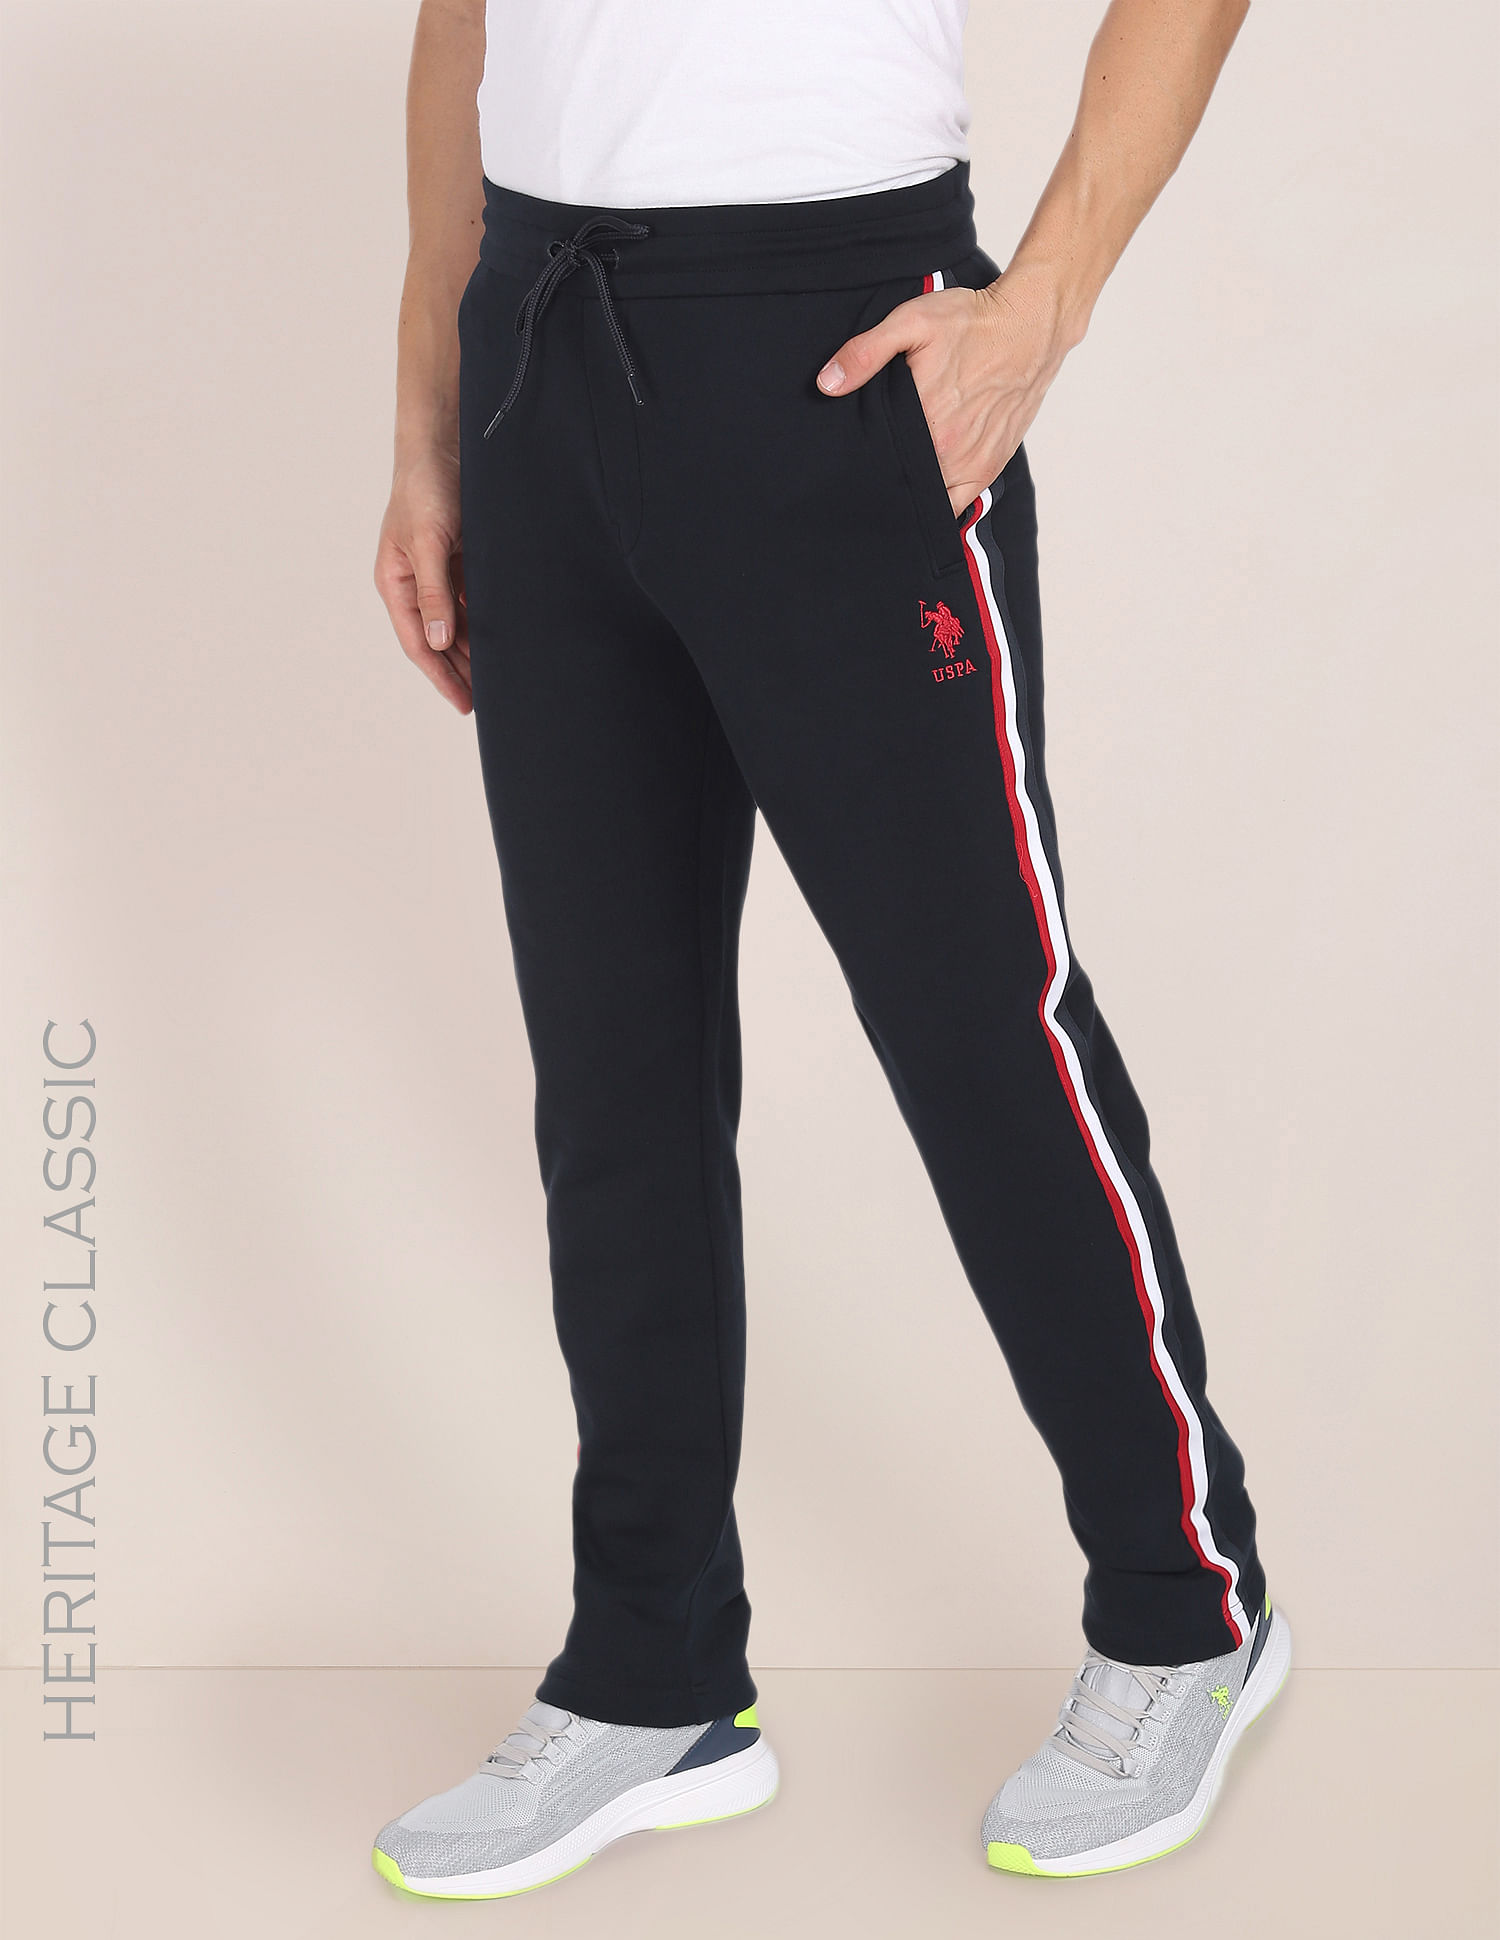 Buy New Balance Black Track Pants - Track Pants for Men 1813279 | Myntra